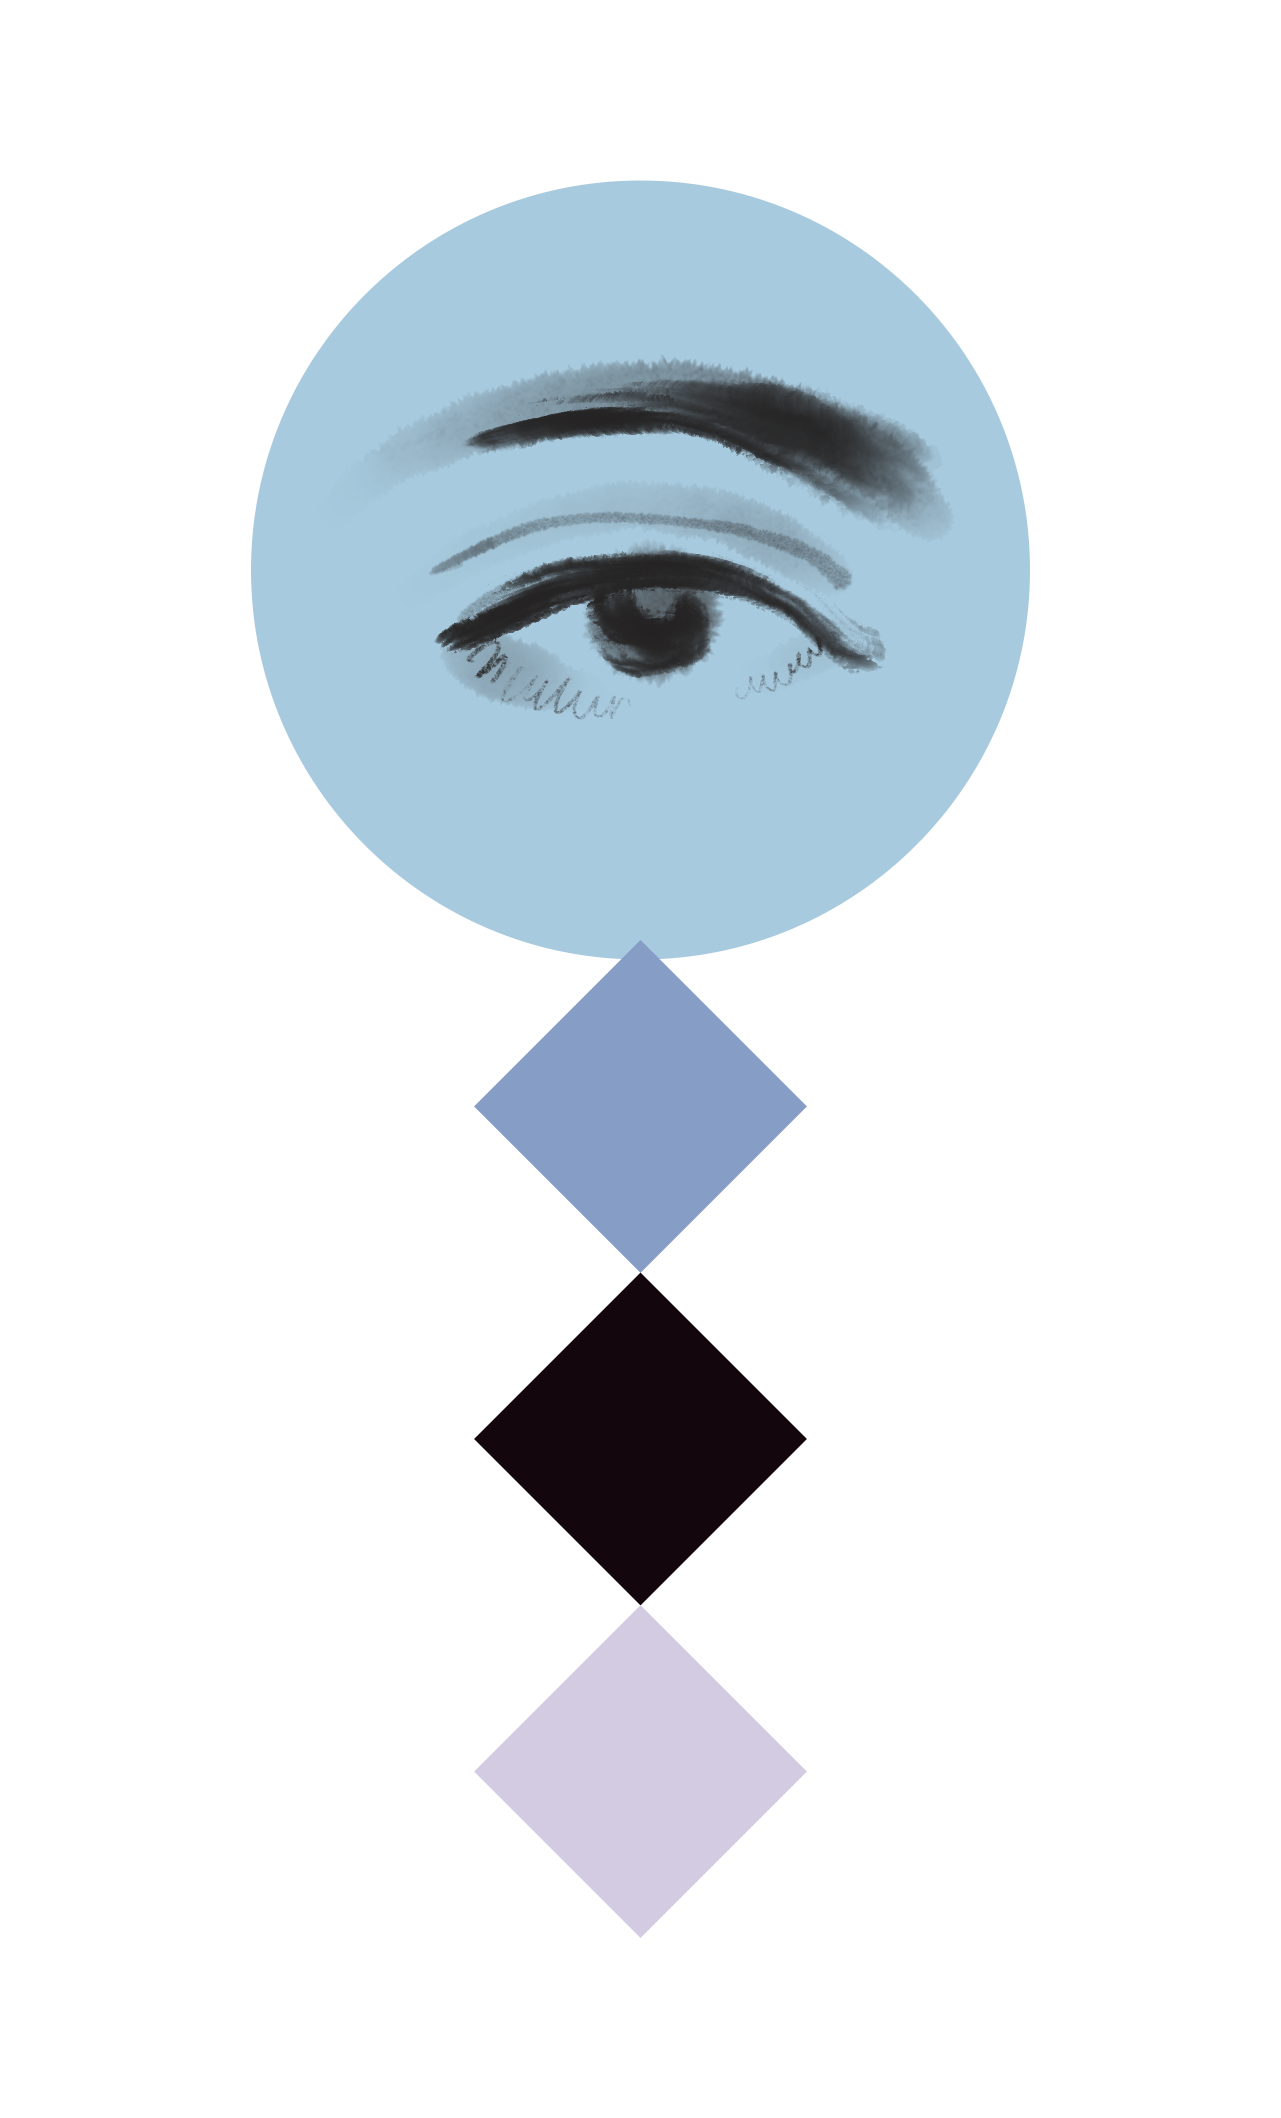 Arlecchino eye, decor illustration by Silvana Mariani